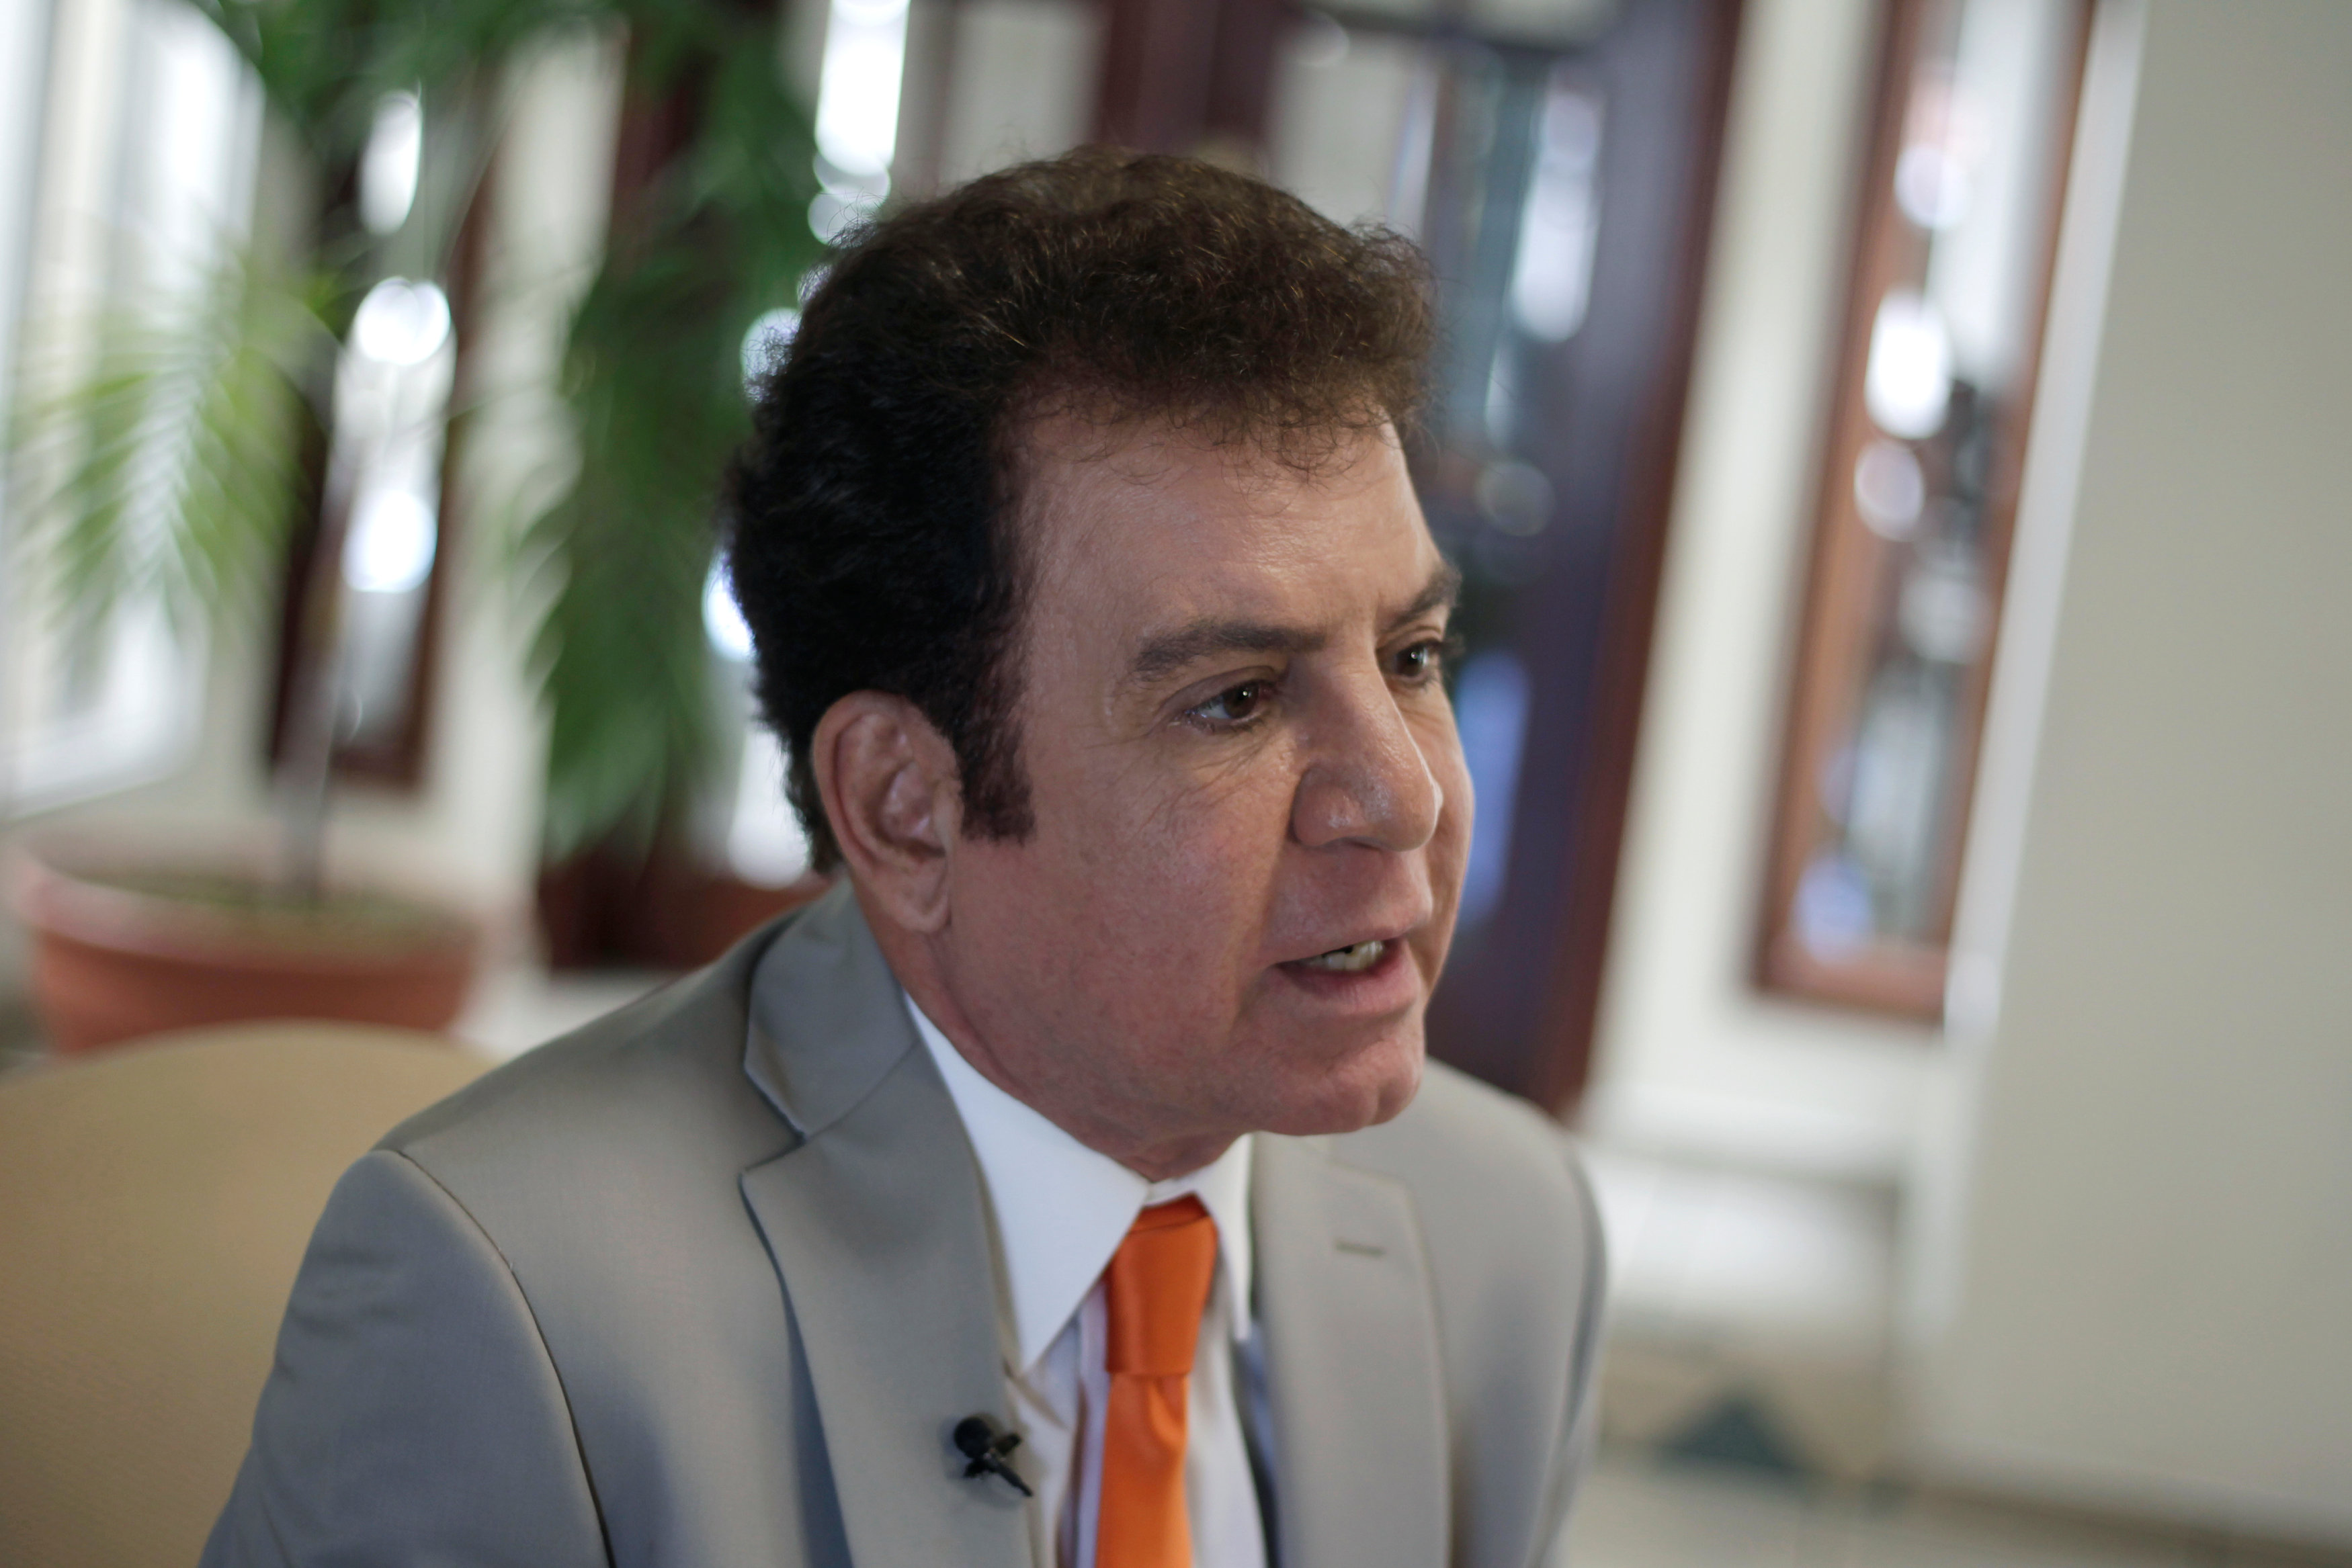 Honduras opposition candidate alleges fraud in presidential vote